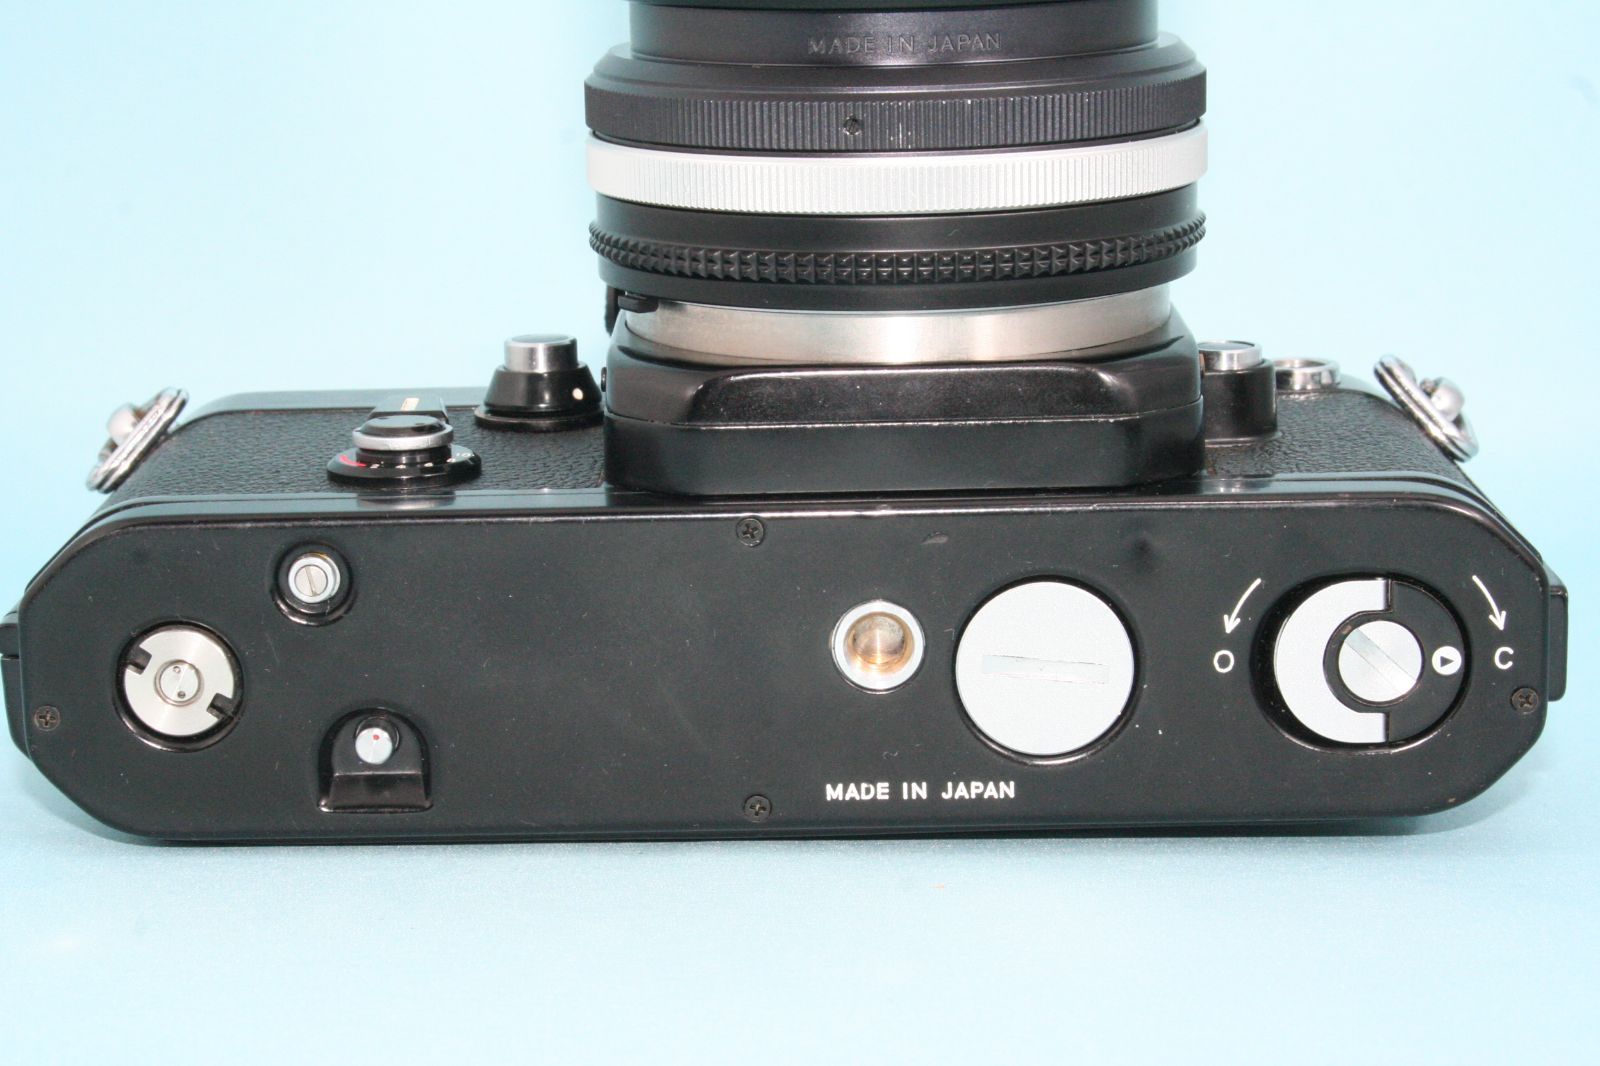 Nikon F2 フォトミック DP-2 + Ai-s Zoom-Nikkor 35-105mm f3.5-4.5